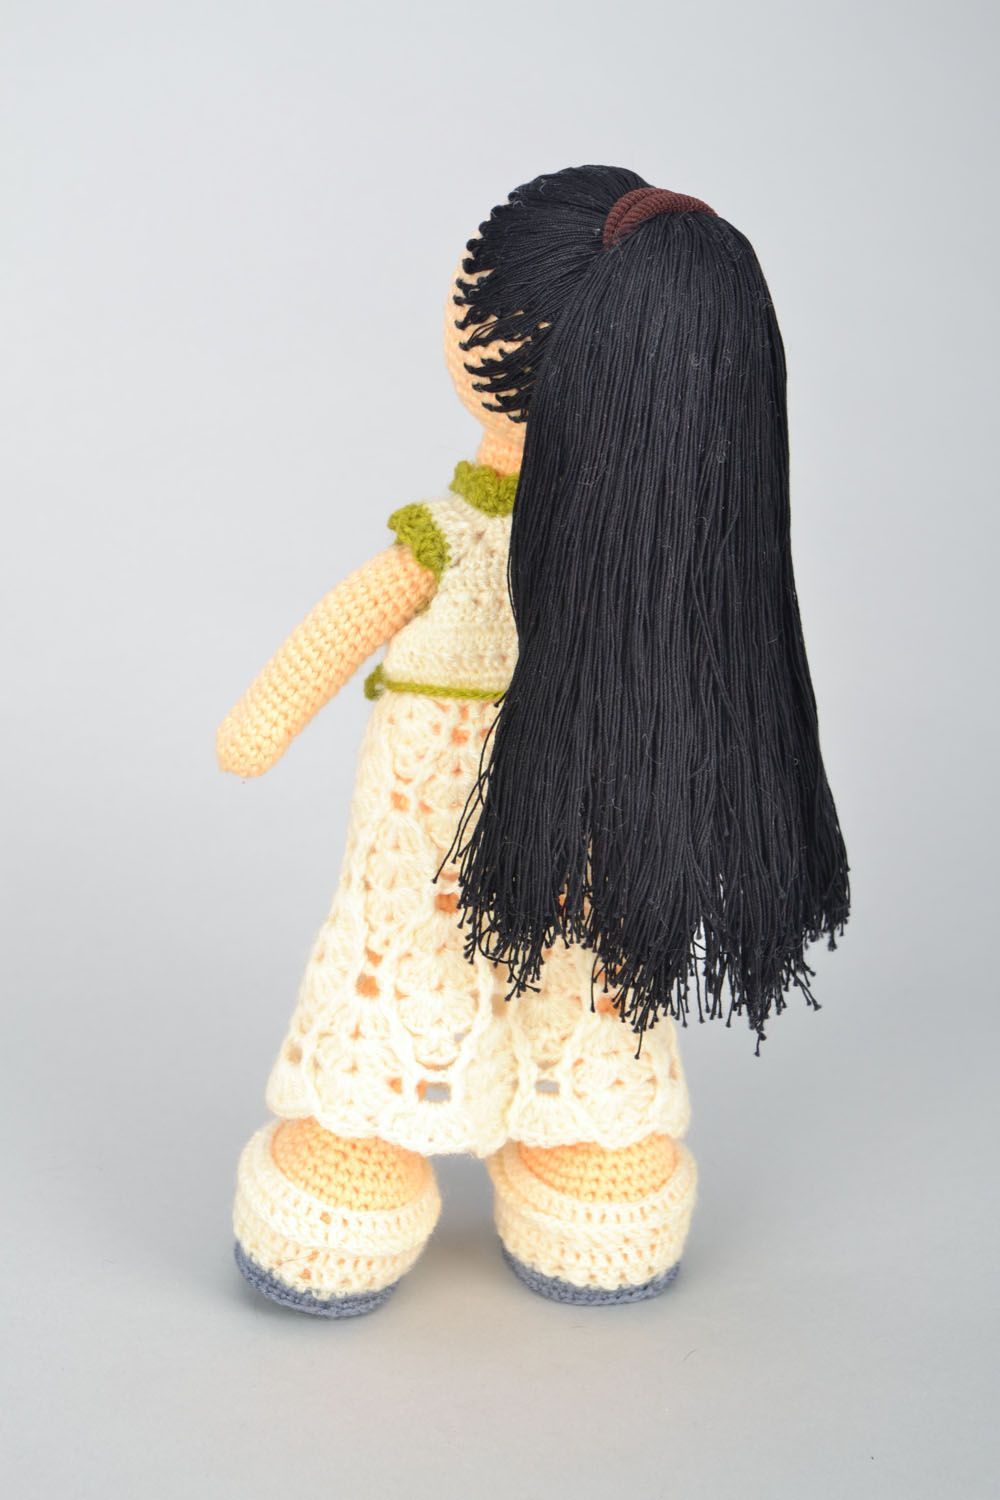 Crochet doll photo 5